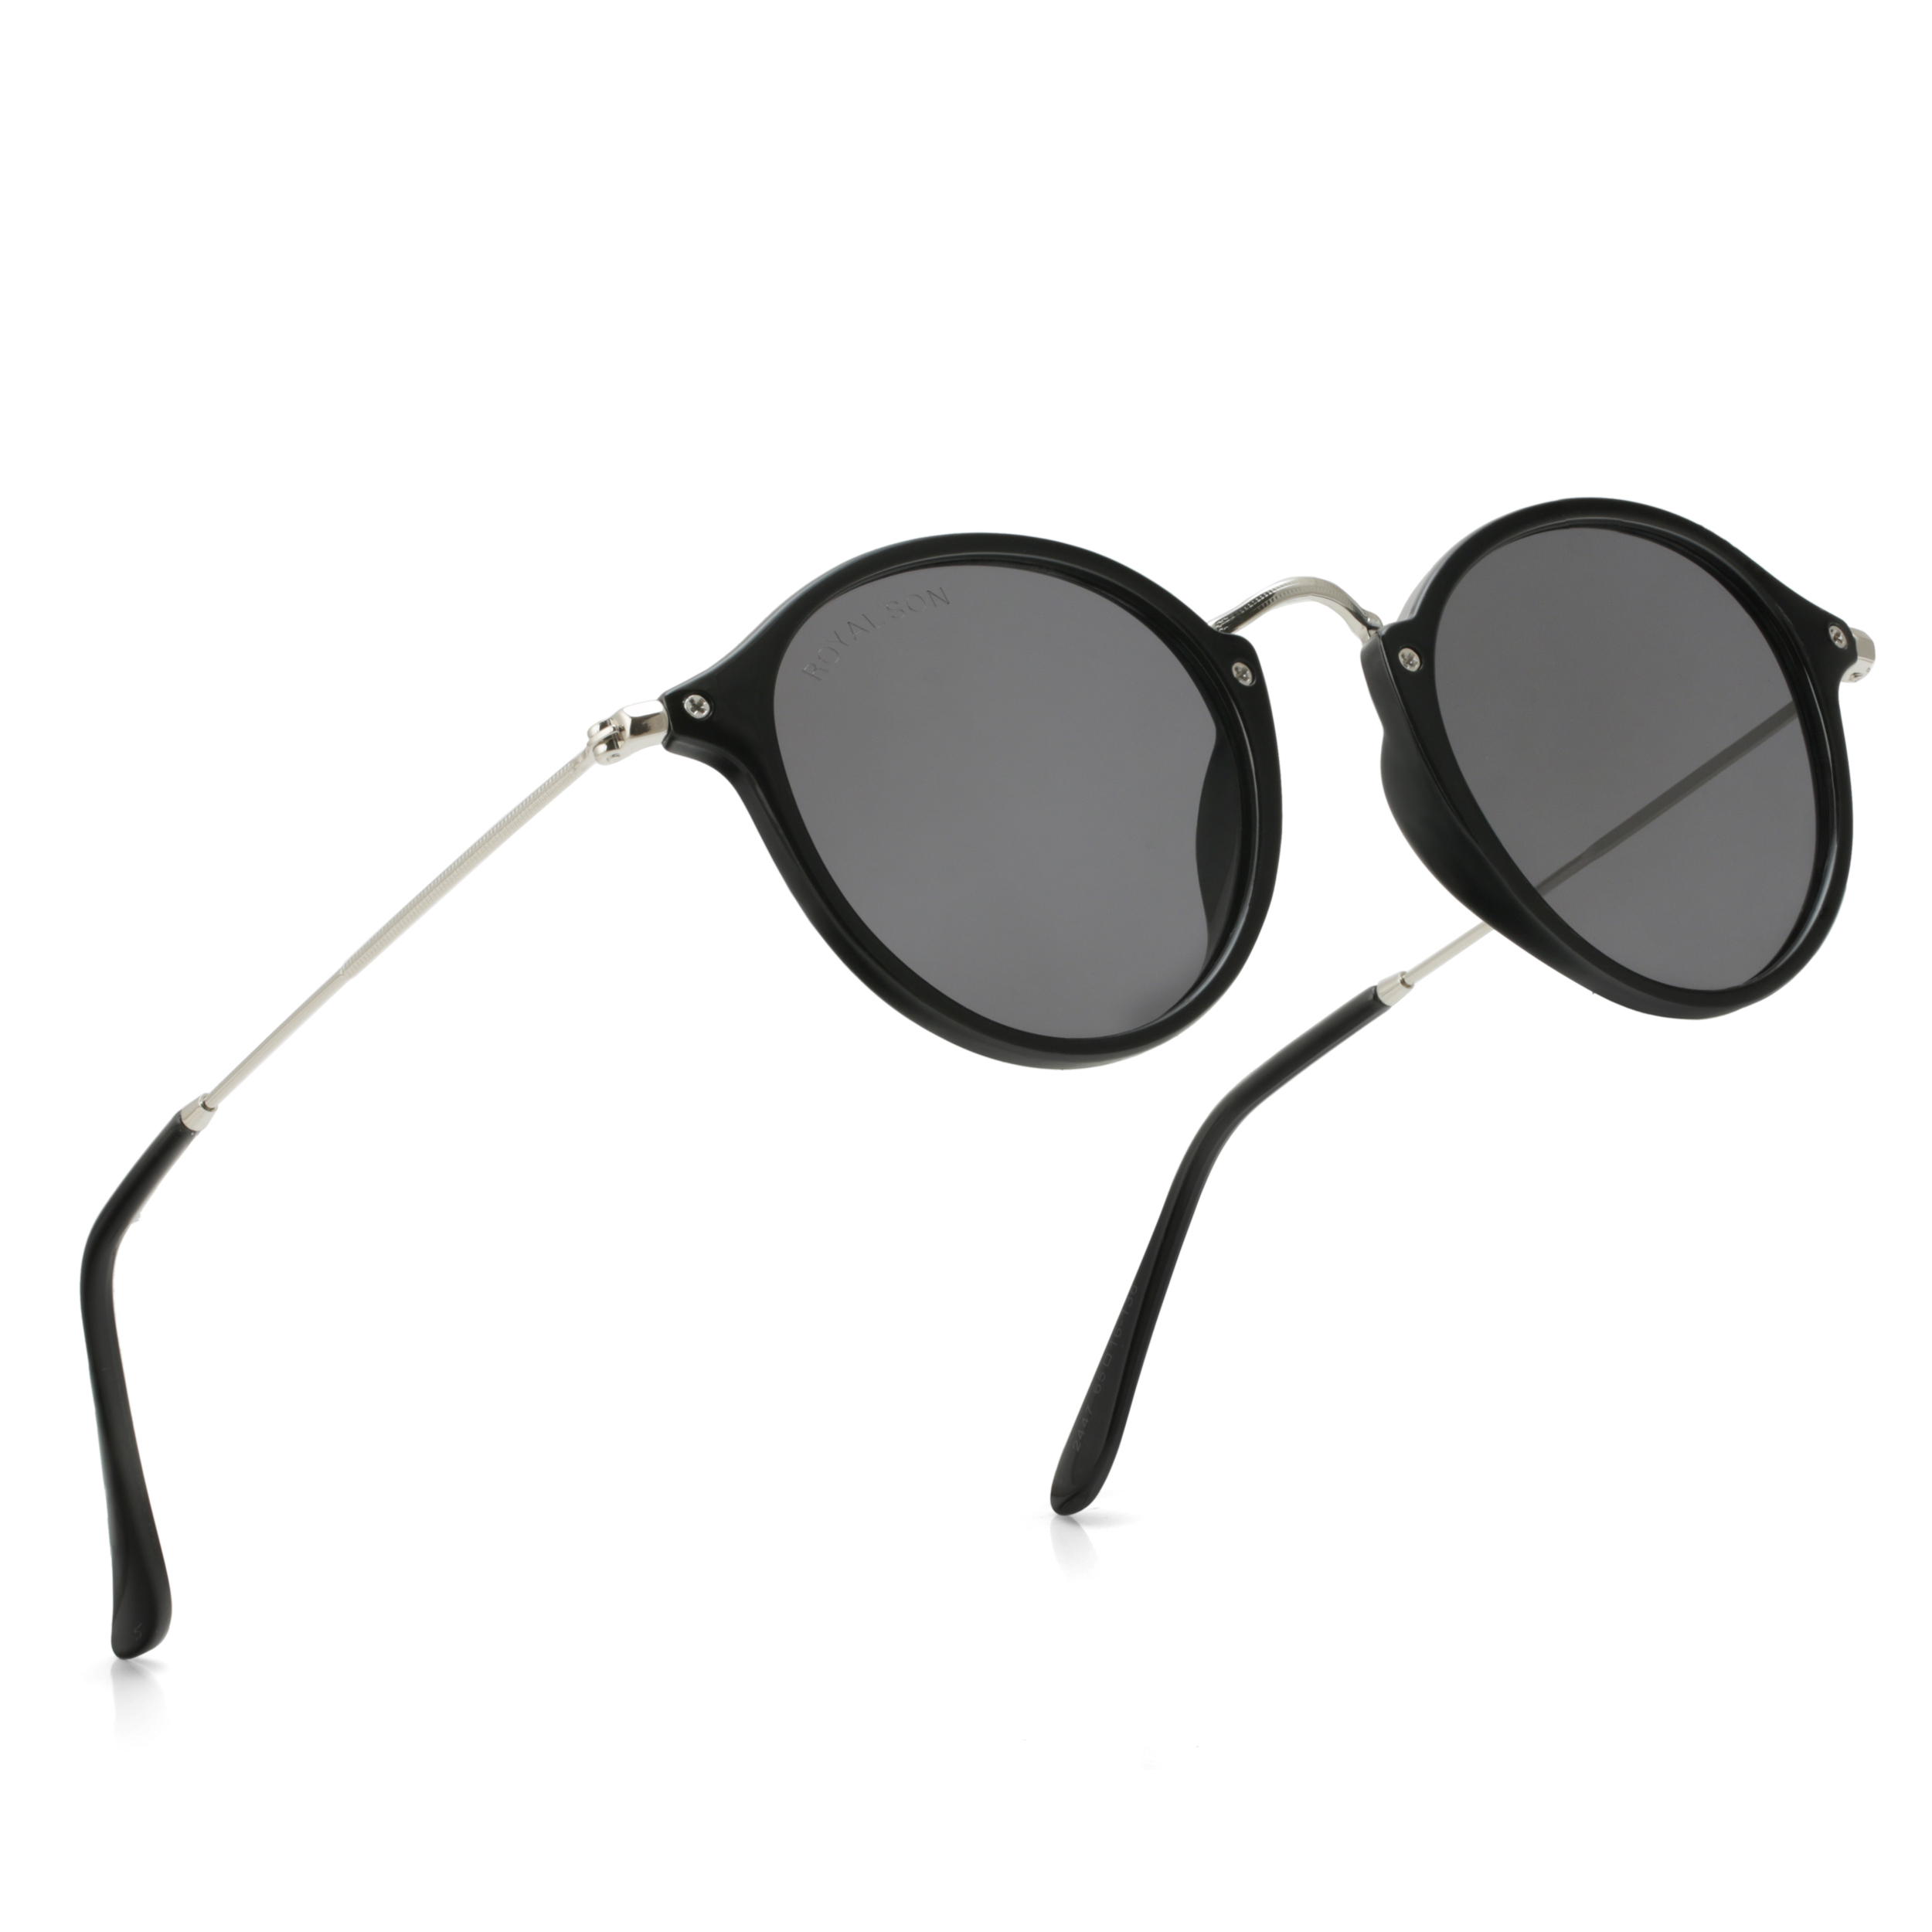 Accessories Sunglasses Round Sunglasses Kapten & Son Round Sunglasses black casual look 